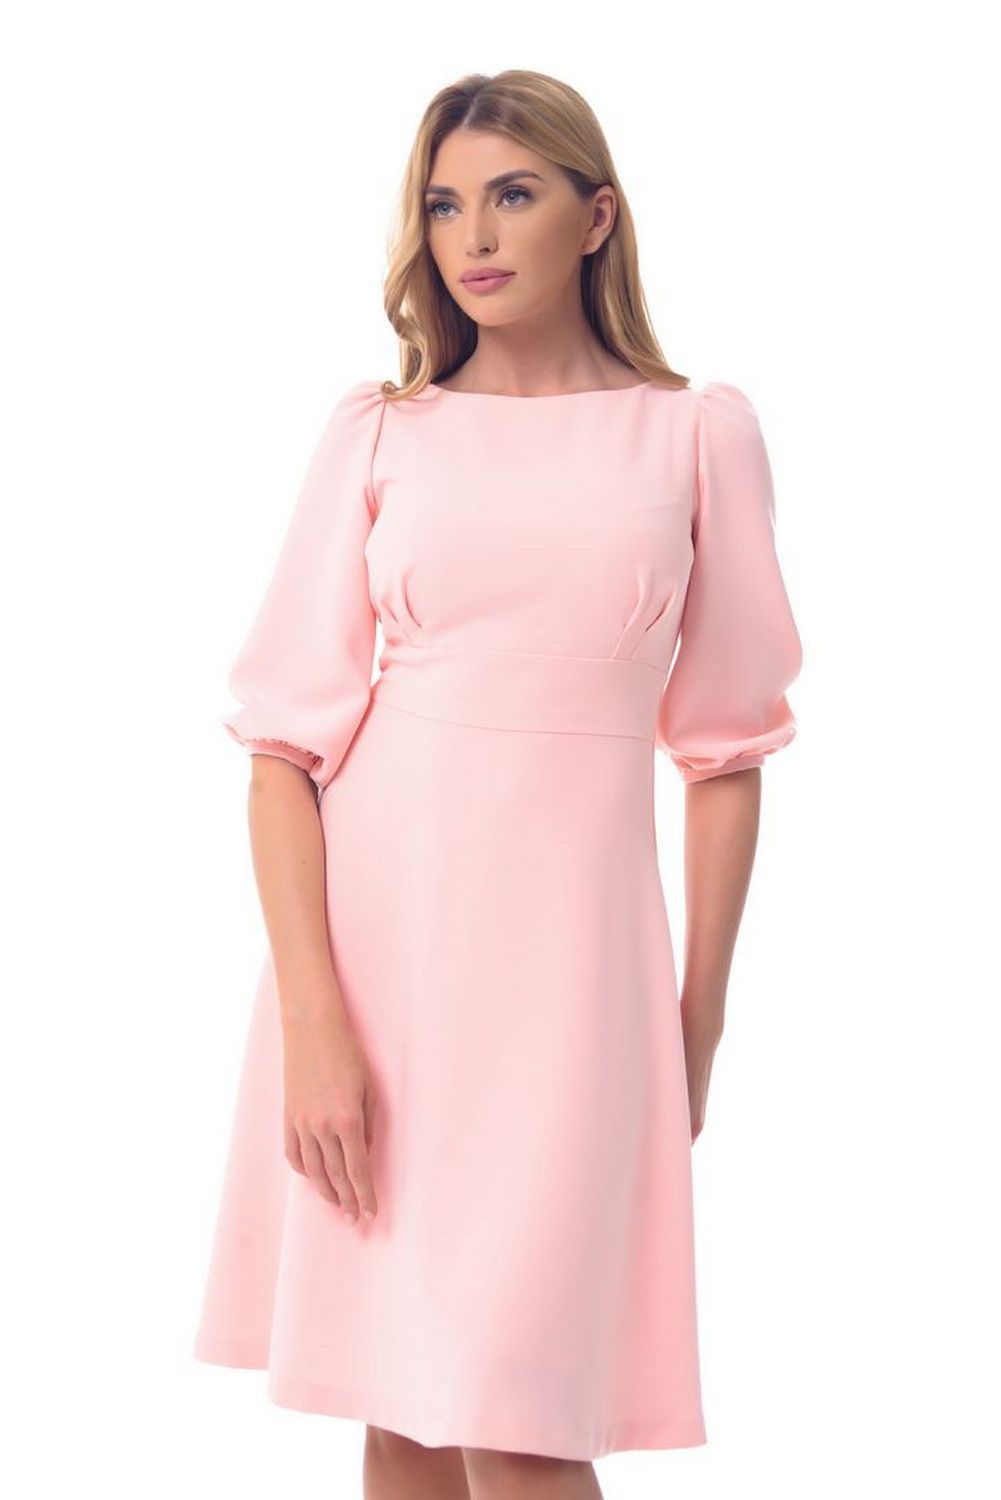 Buy Women Pink Elegant dress, Knee length short sleeve party dress by Arefeva